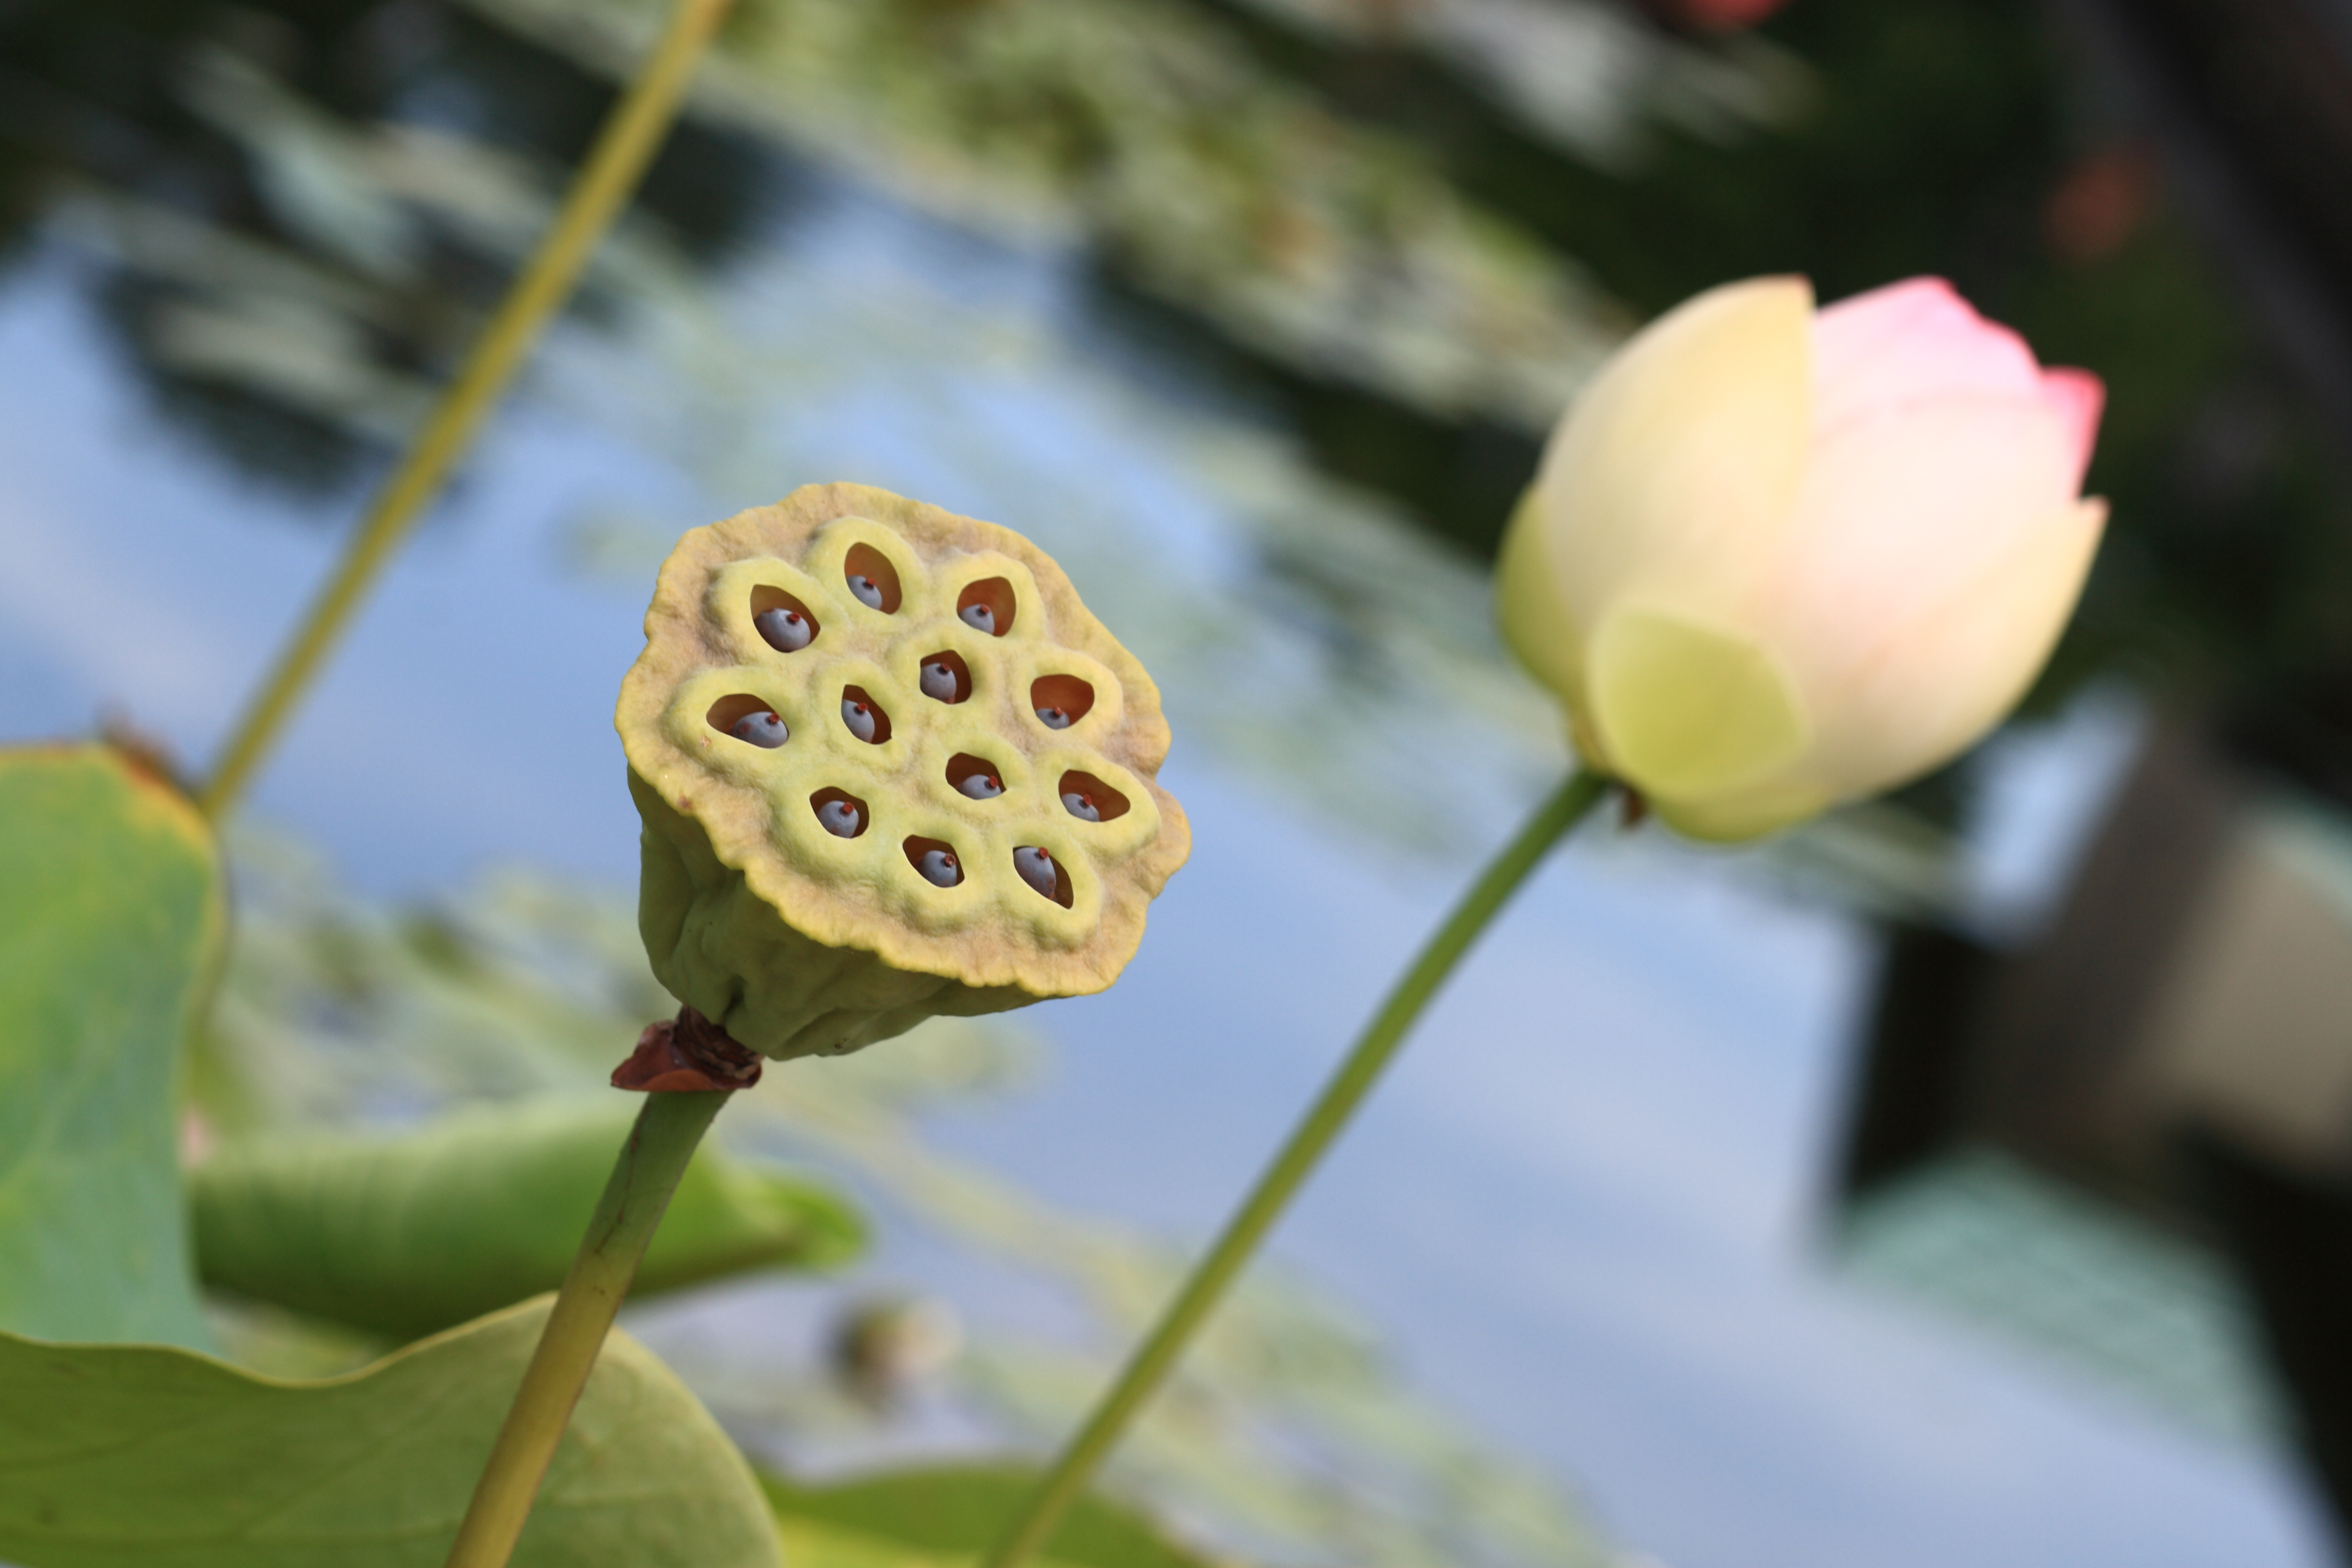 trypophobia lotus pod